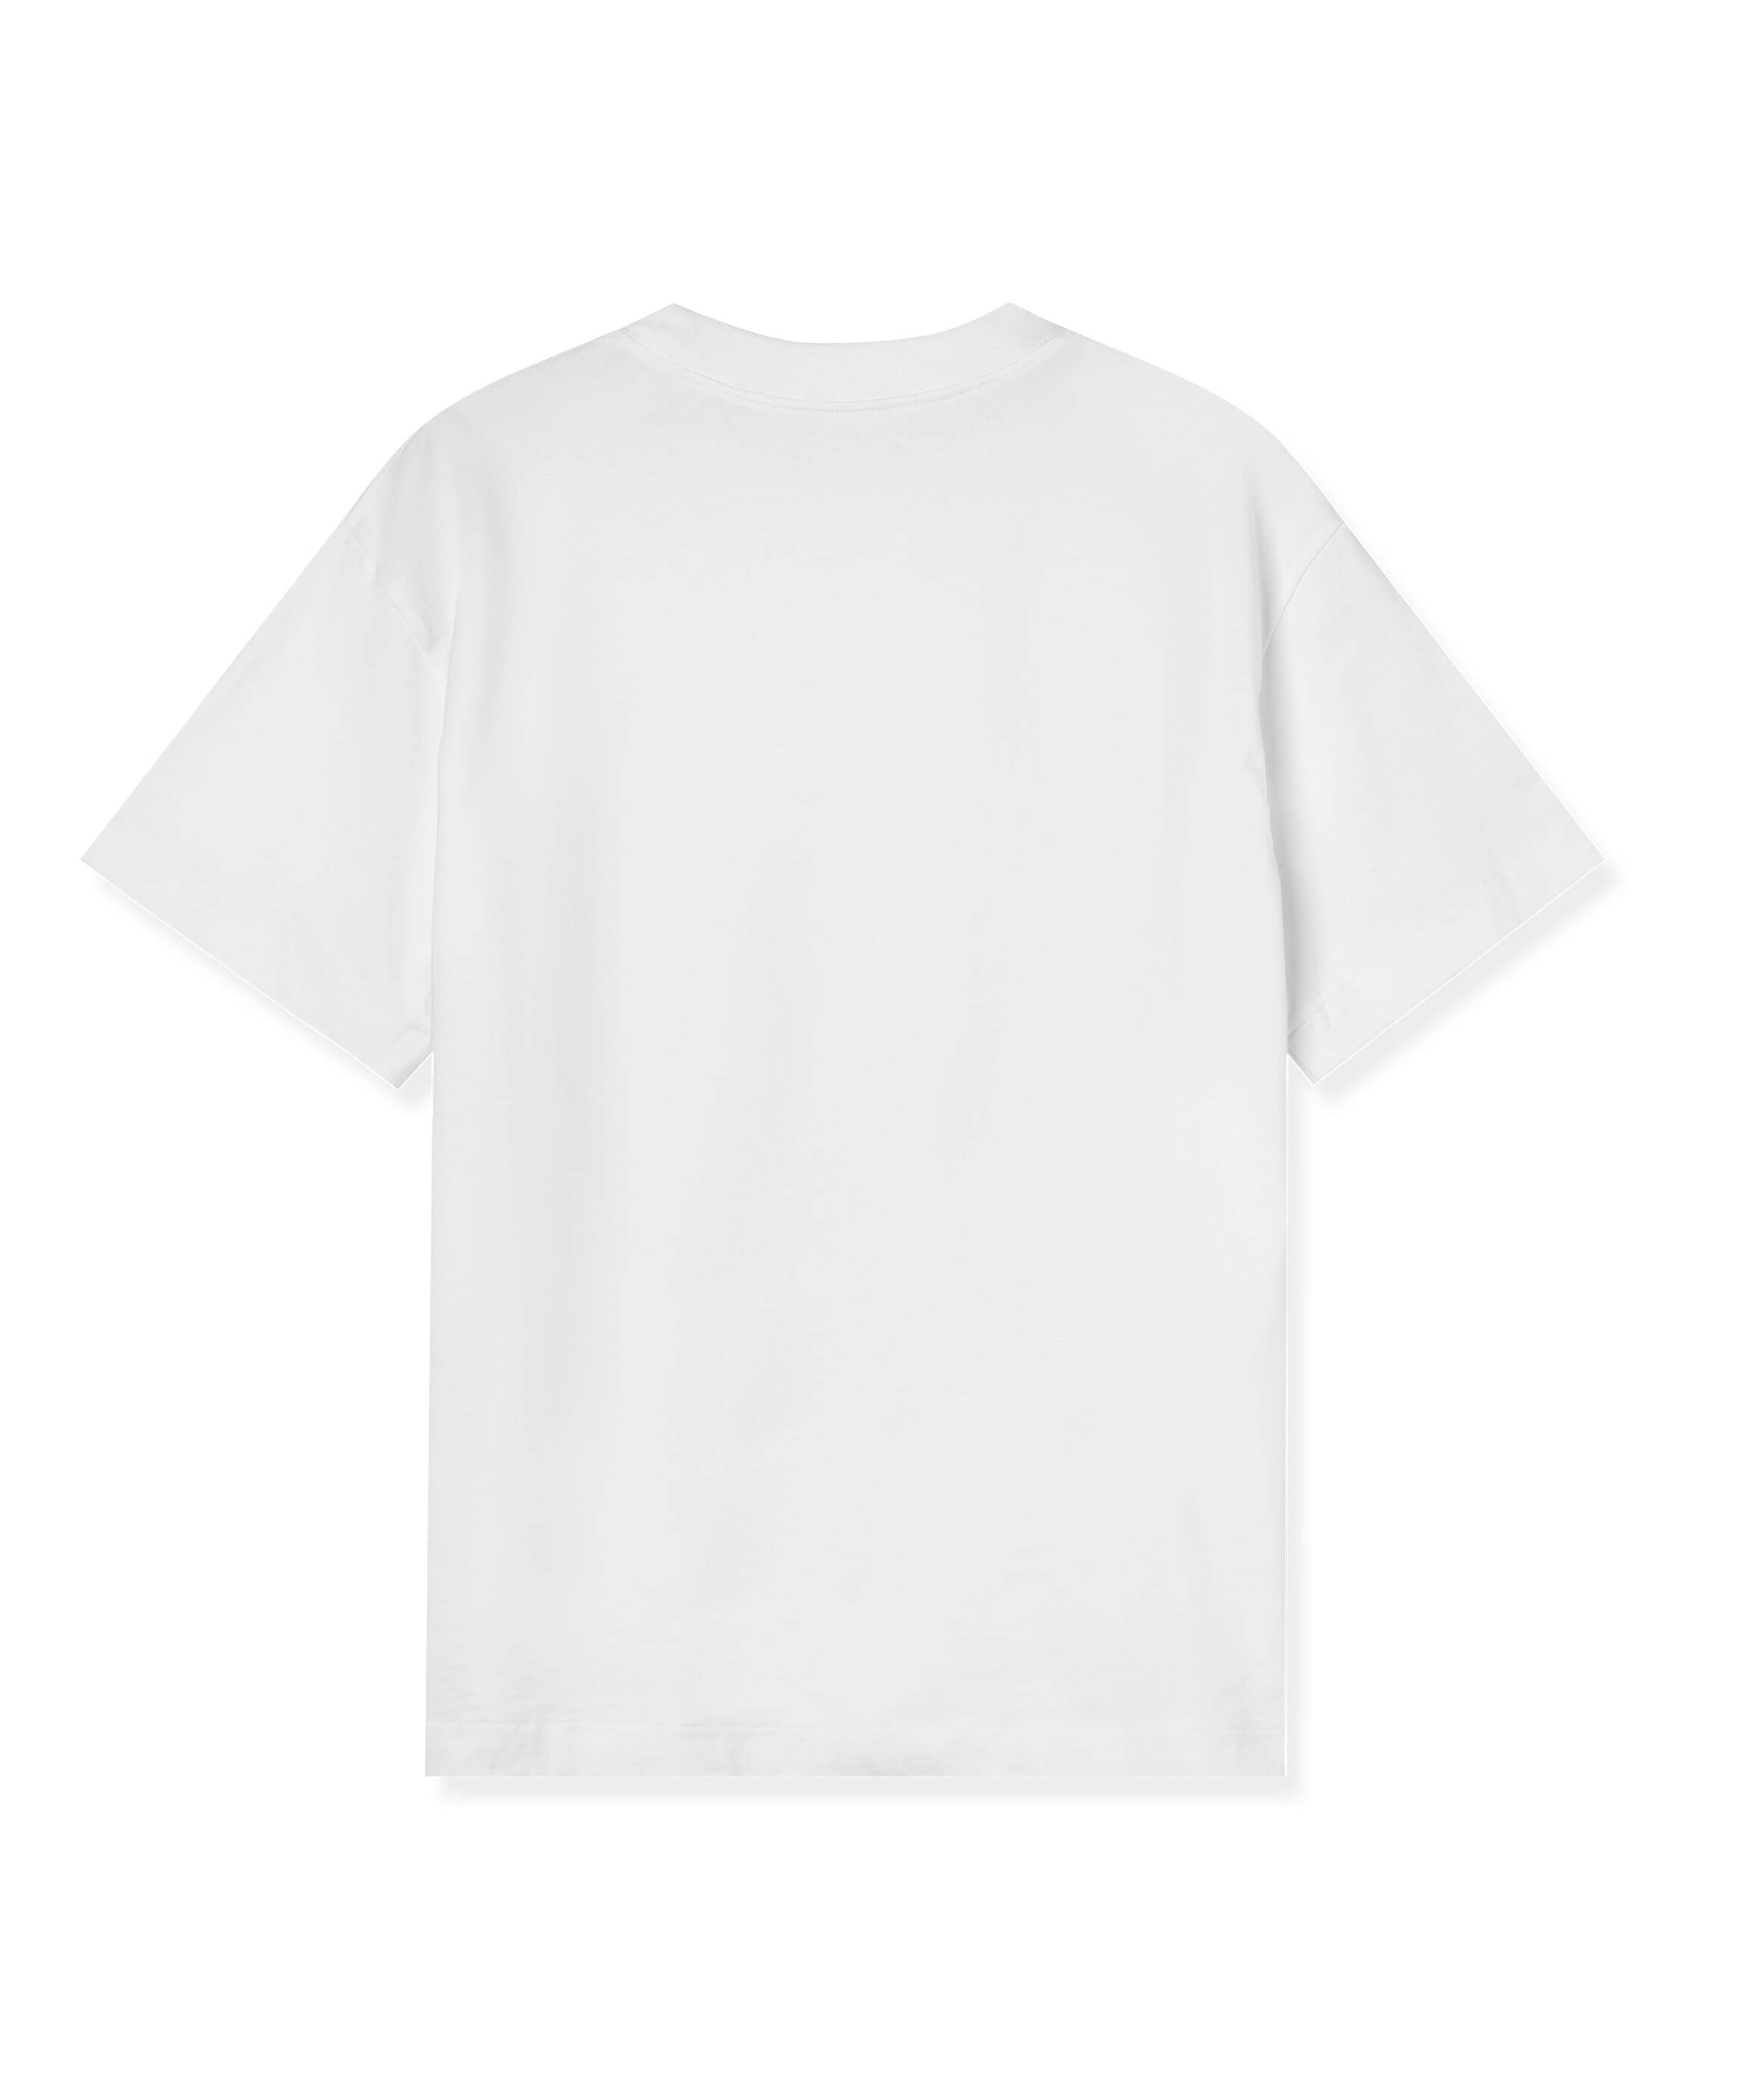 Self-Care Box T-Shirt (Male)